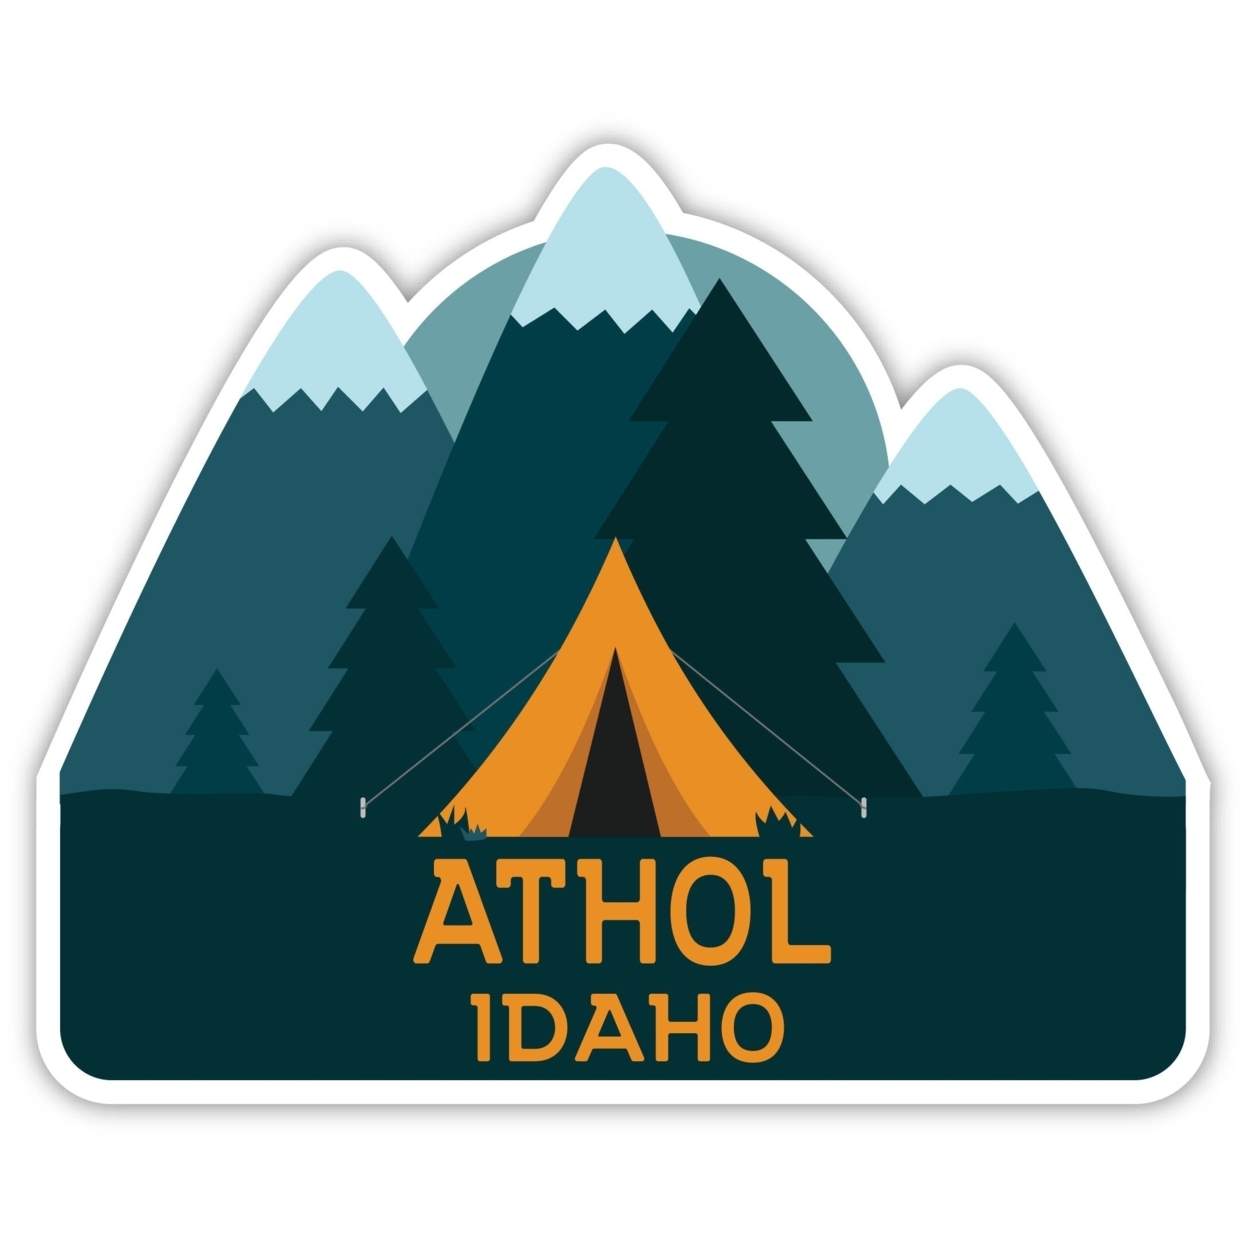 Athol Idaho Souvenir Decorative Stickers (Choose Theme And Size) - Single Unit, 8-Inch, Tent